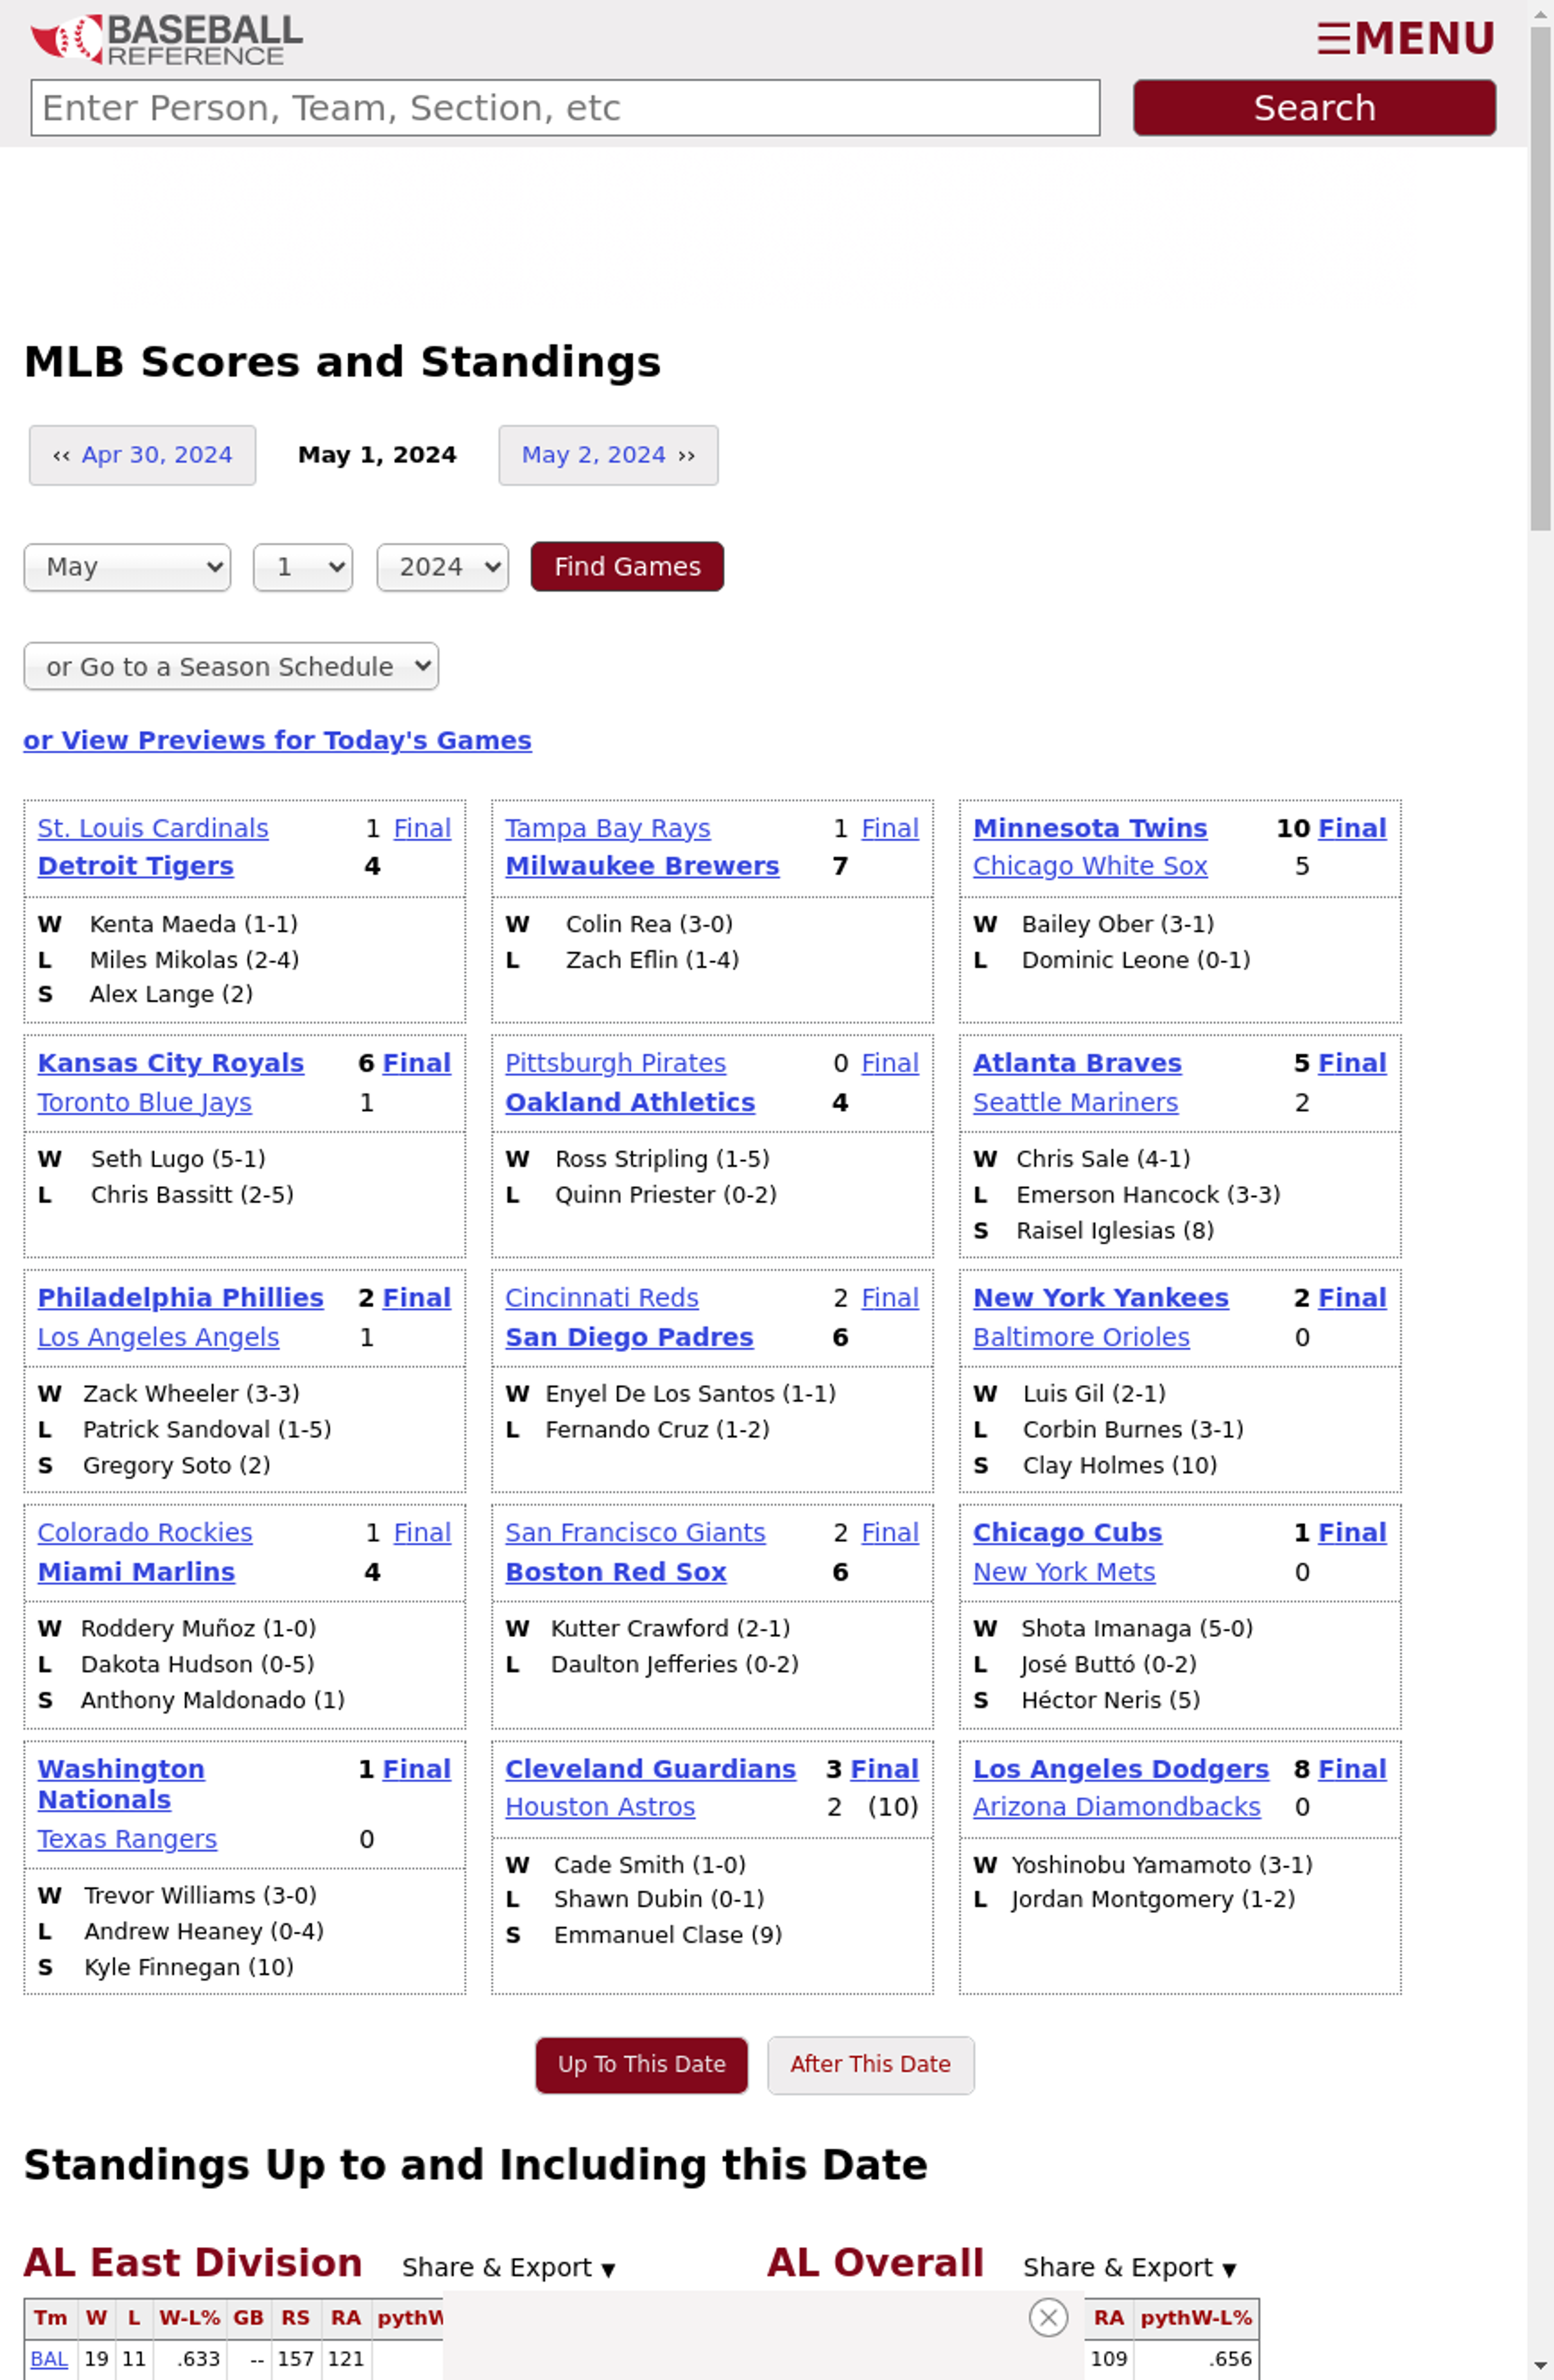 Screenshot of MLB box scores on Baseball Reference